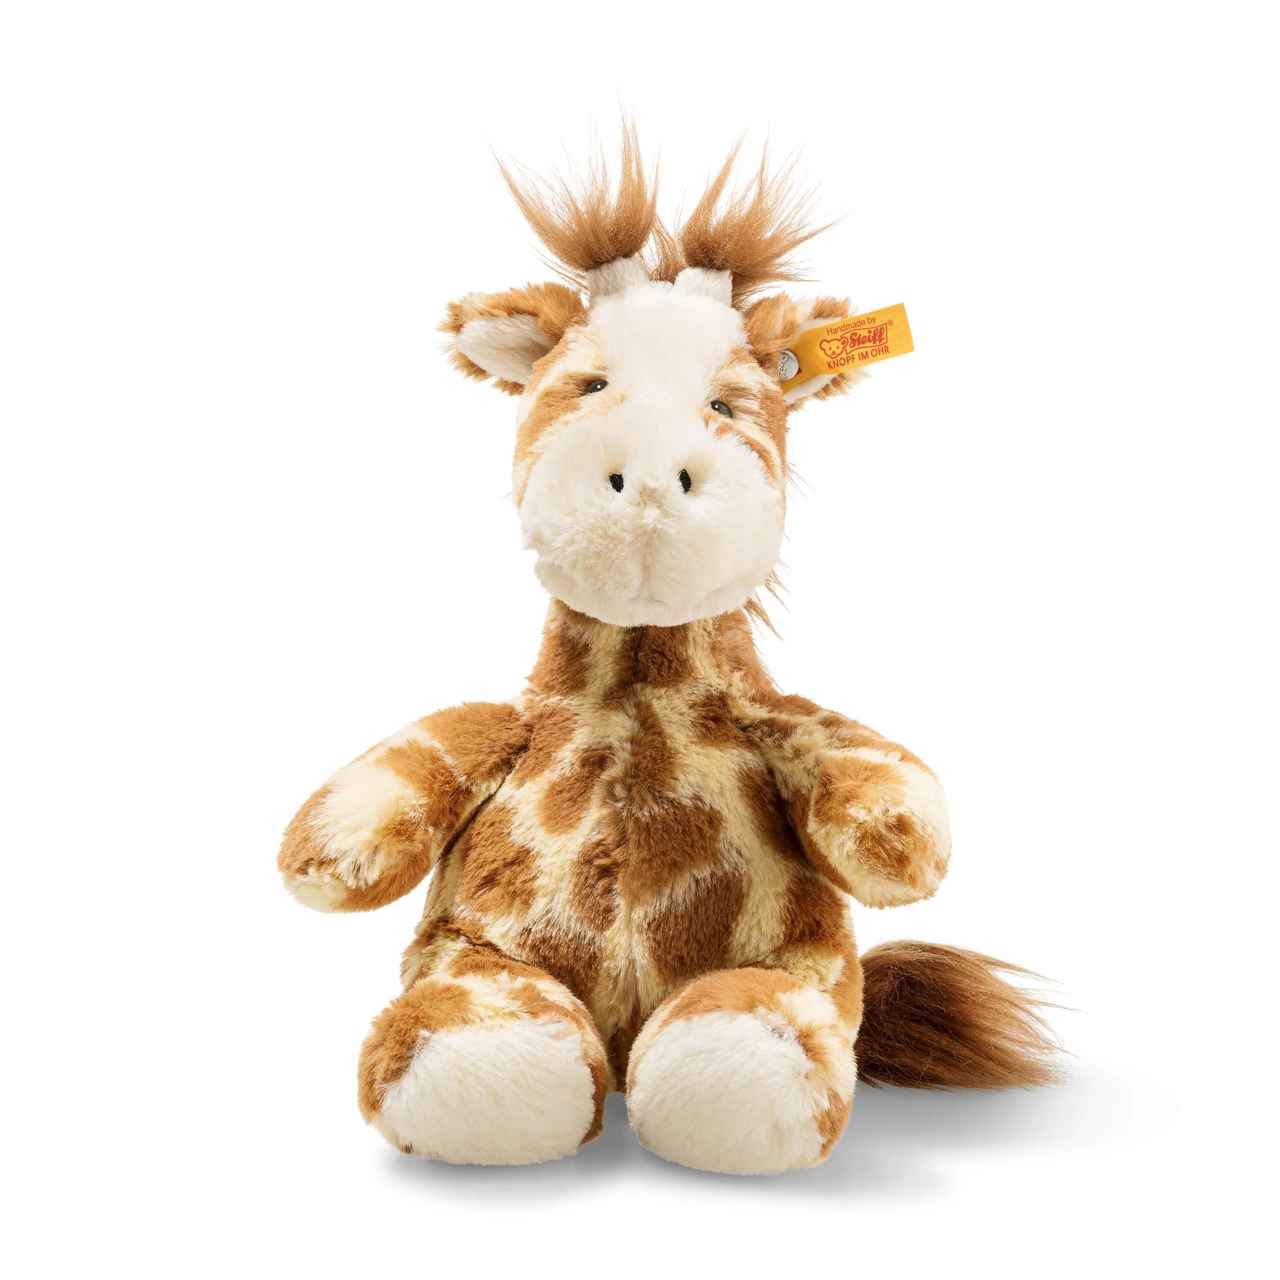 Girta Giraffe Plush Animal Toy, 7 Inches